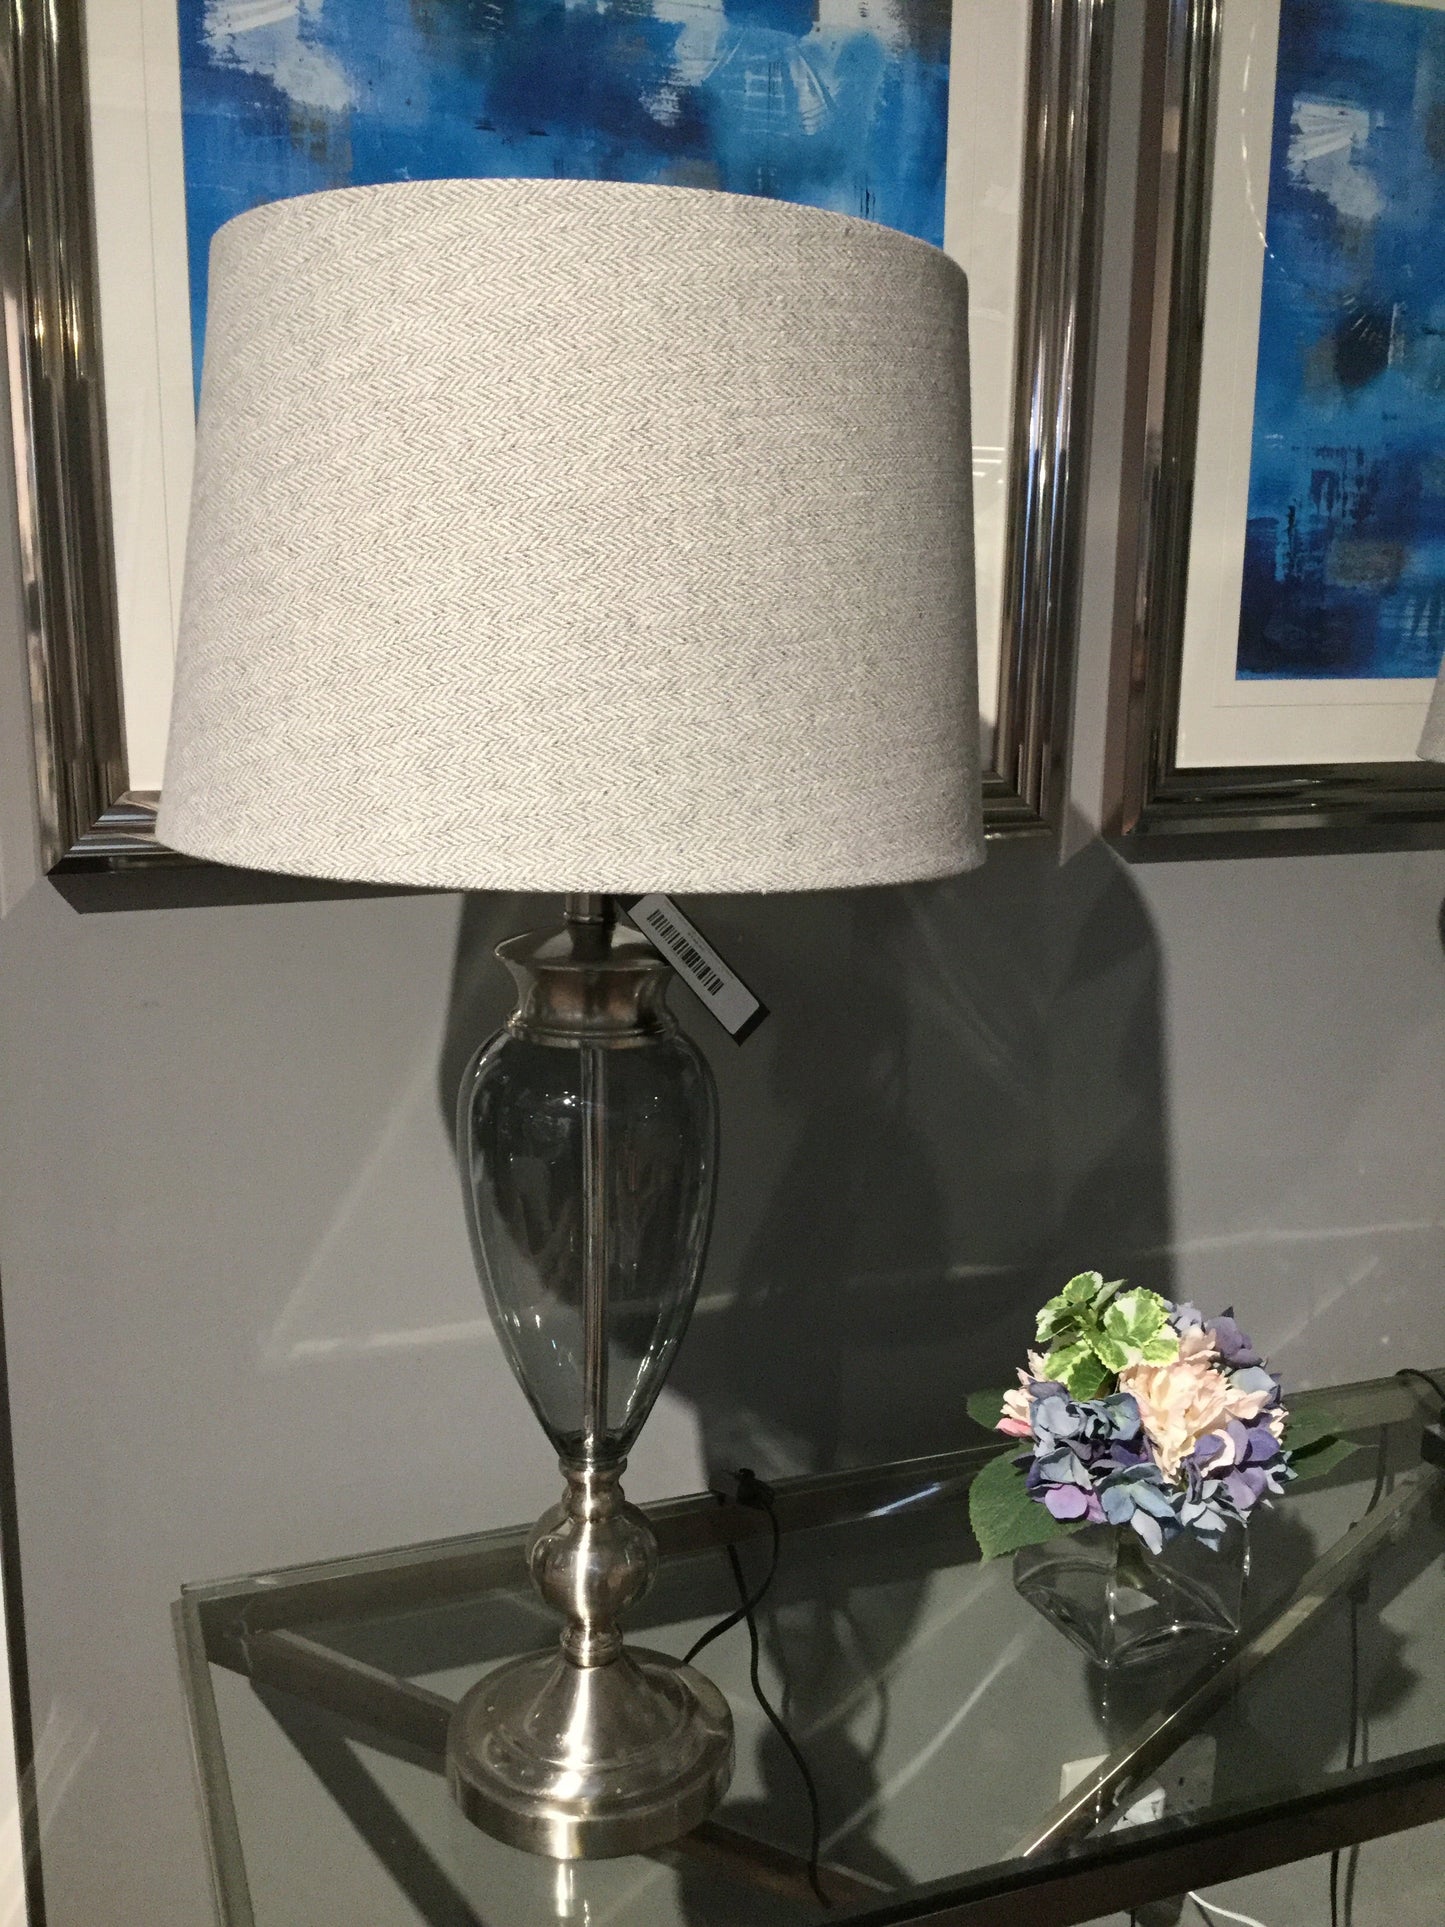 Smoked glass table lamp